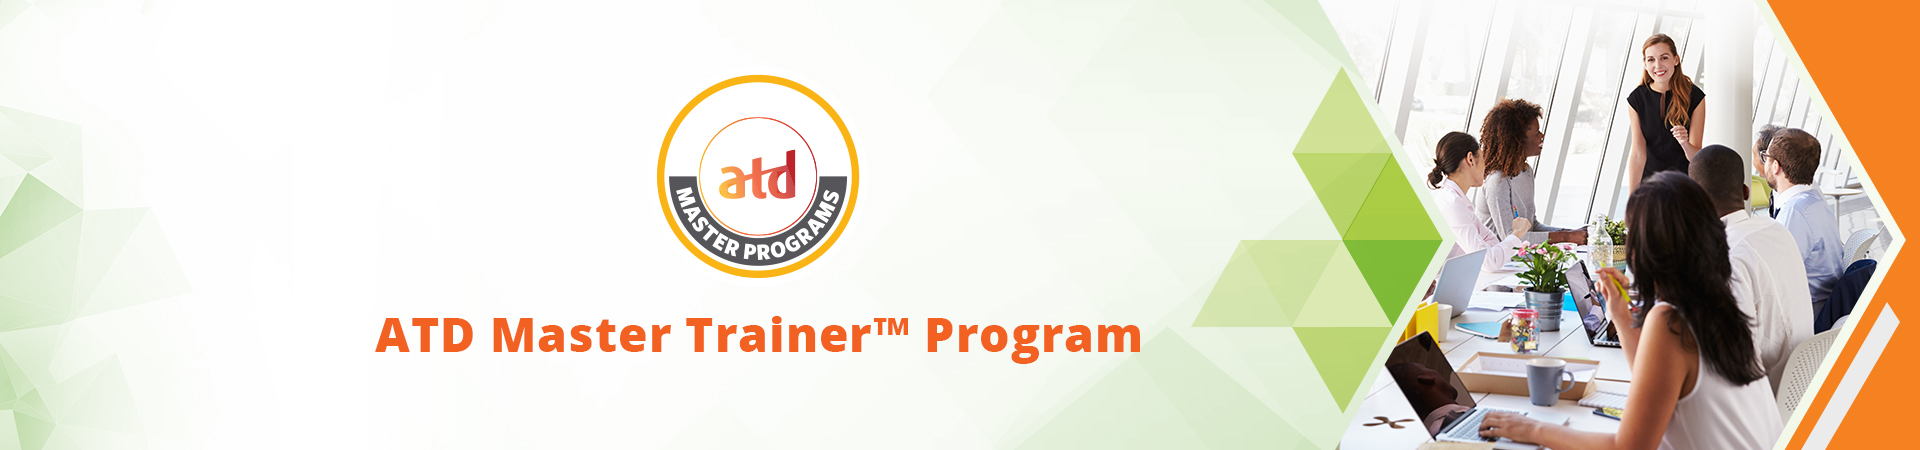 ATD Master Trainer™ Program